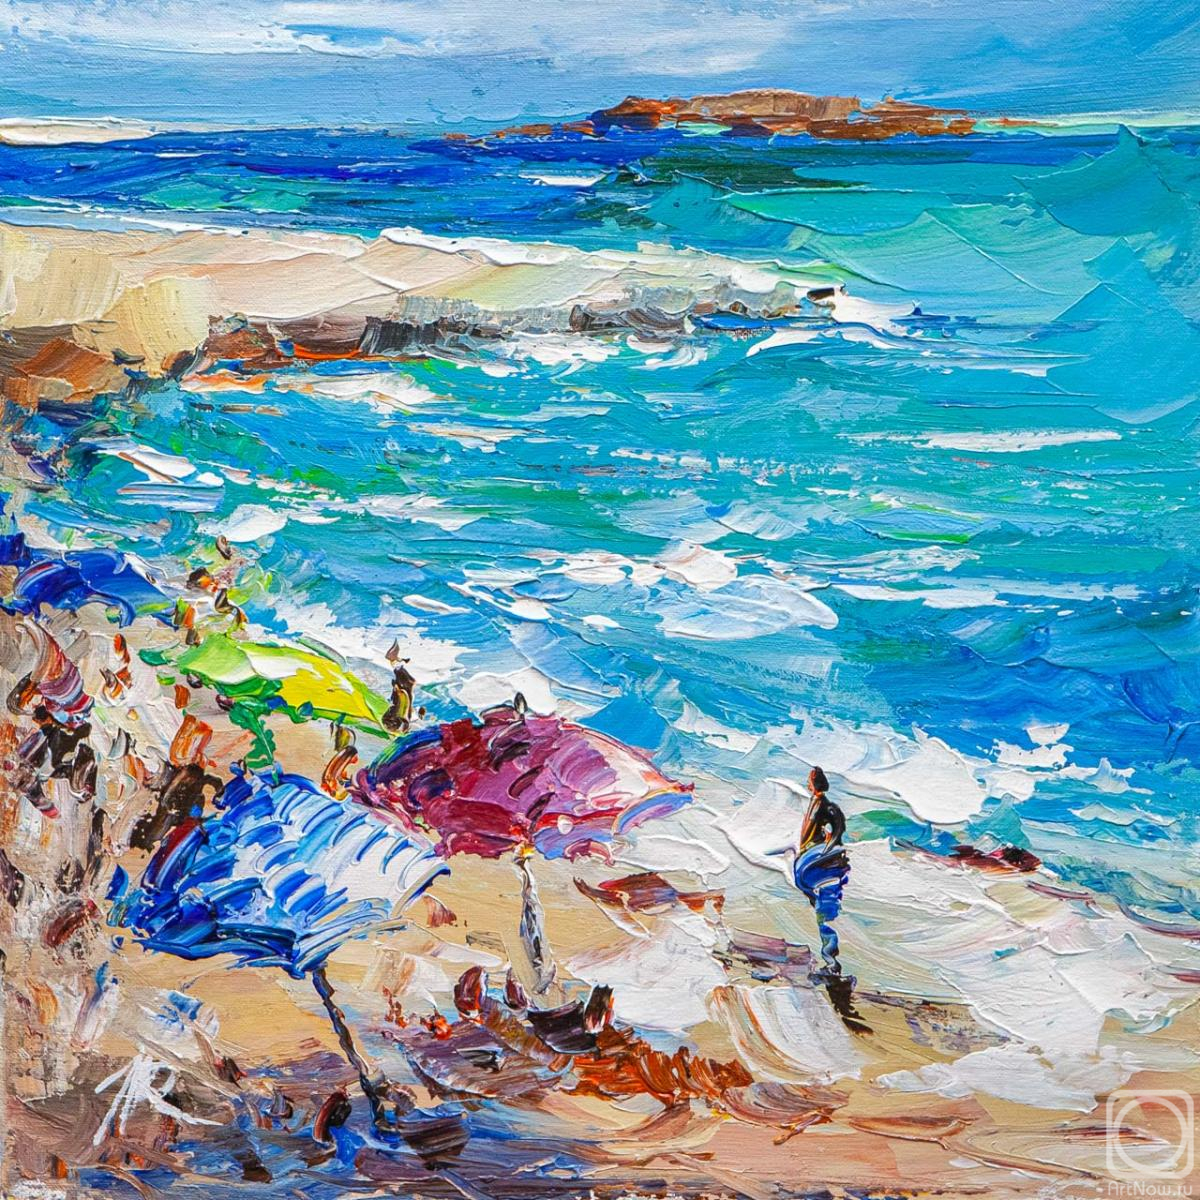 Rodries Jose. Sea, sand, umbrellas